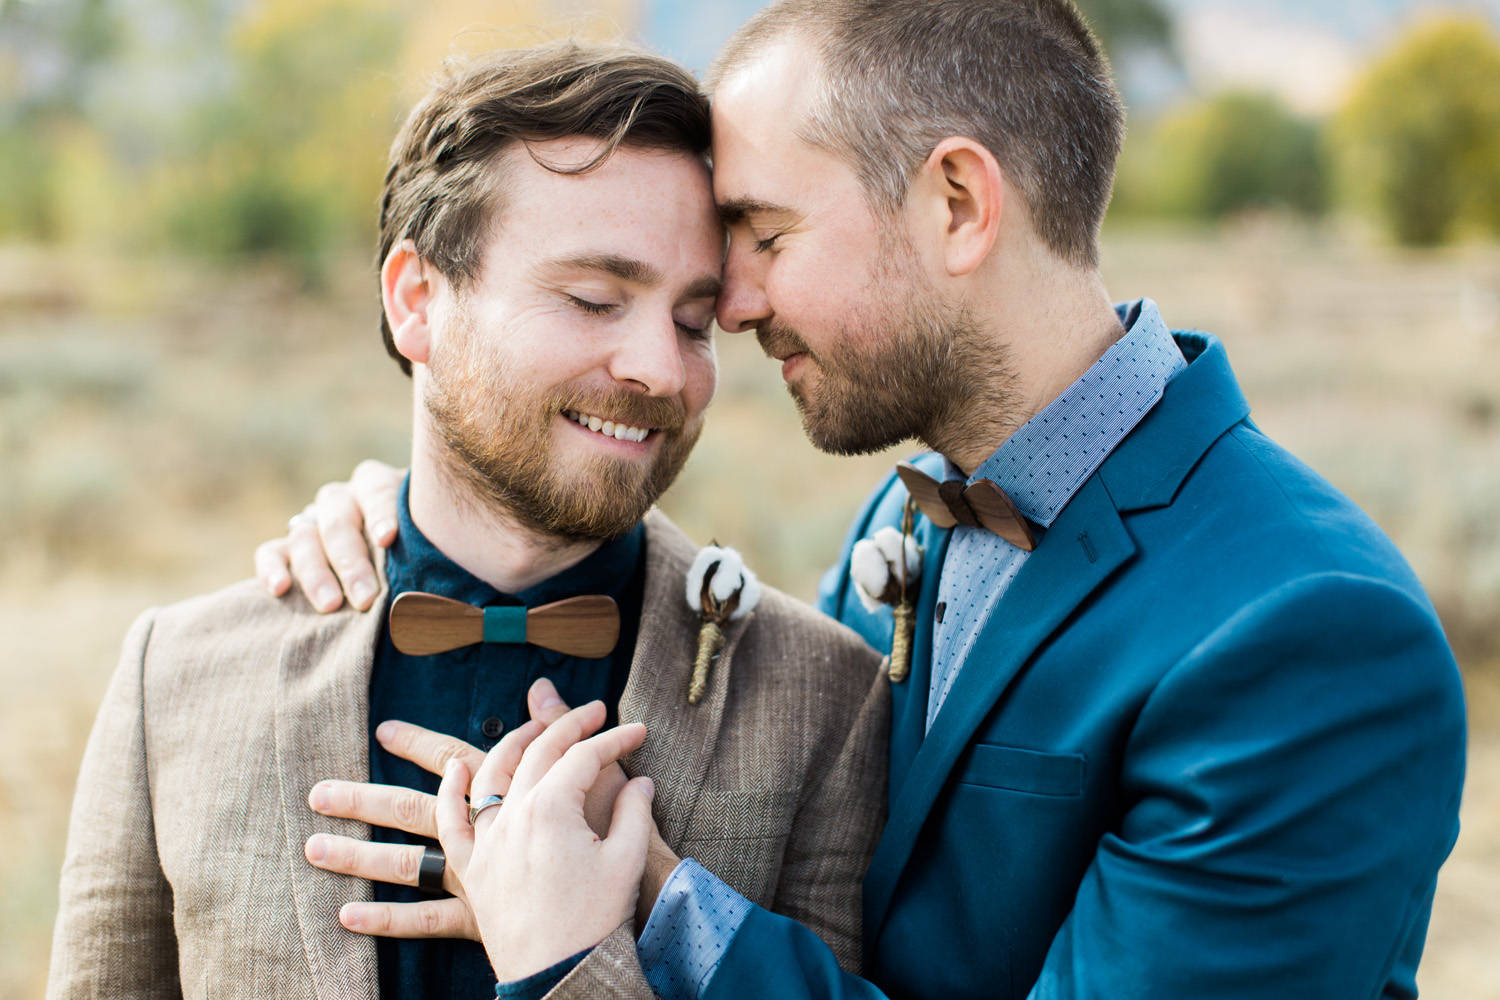 Grand Tetons National Park Same Sex Wedding